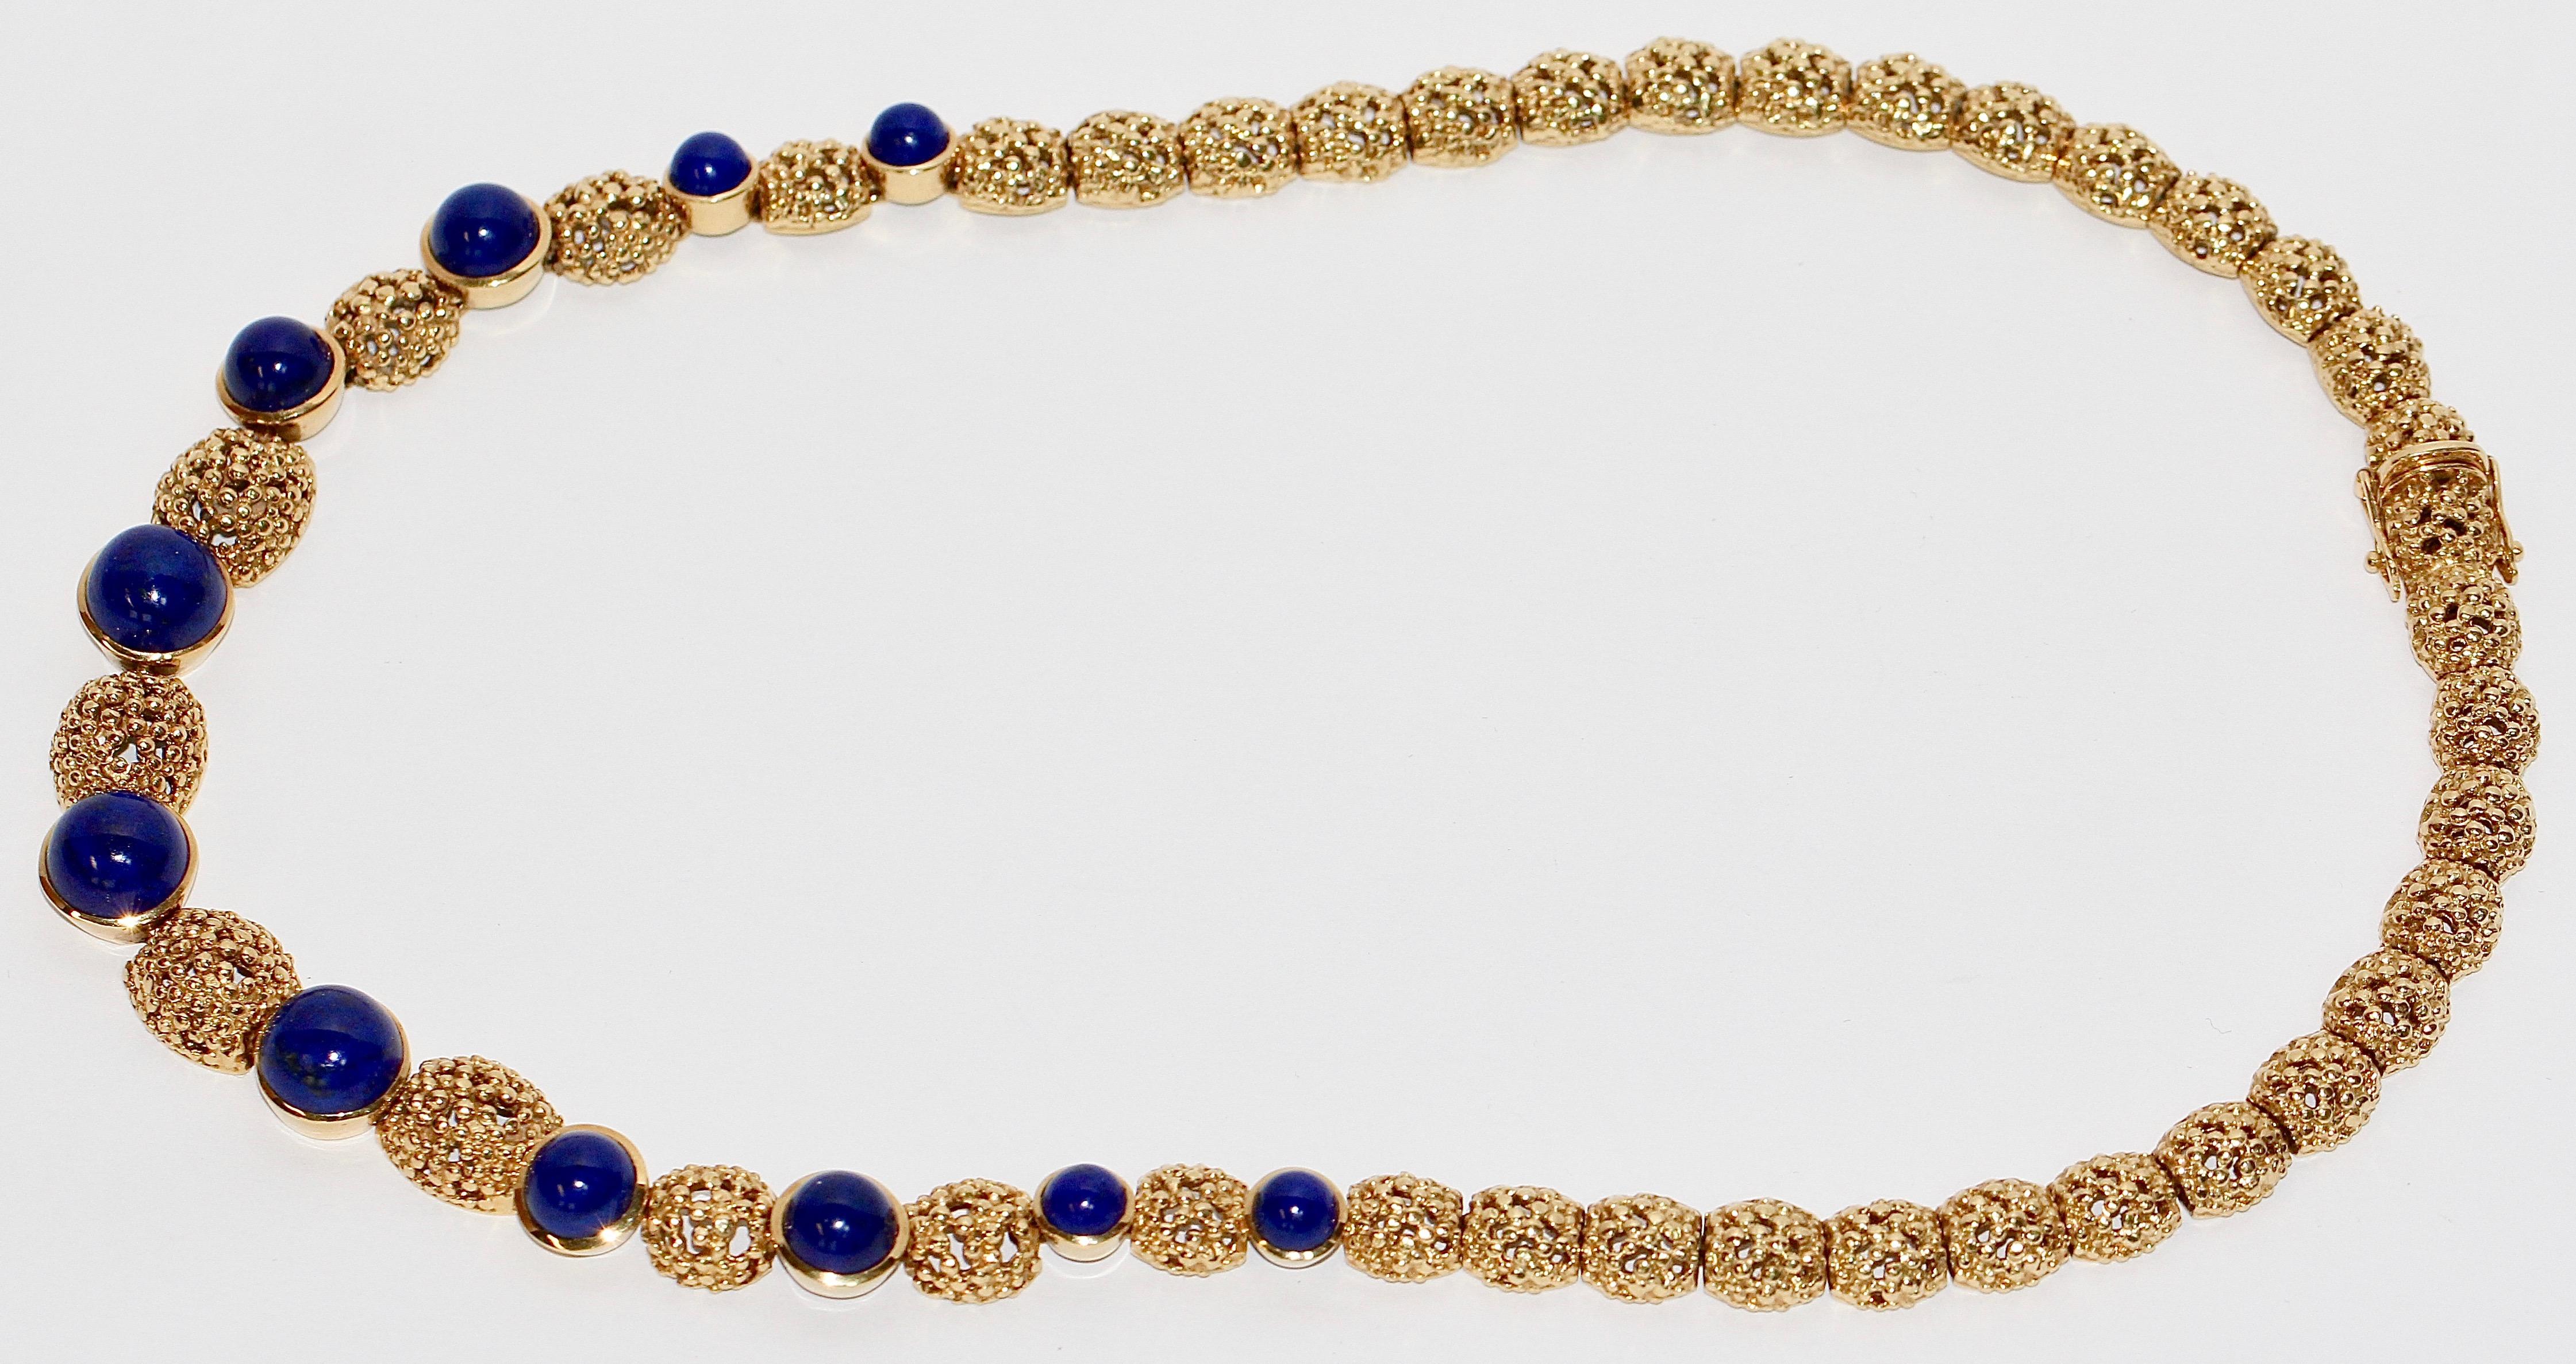 Women's Solid 18 Karat Gold Necklace with Lapis Lazuli